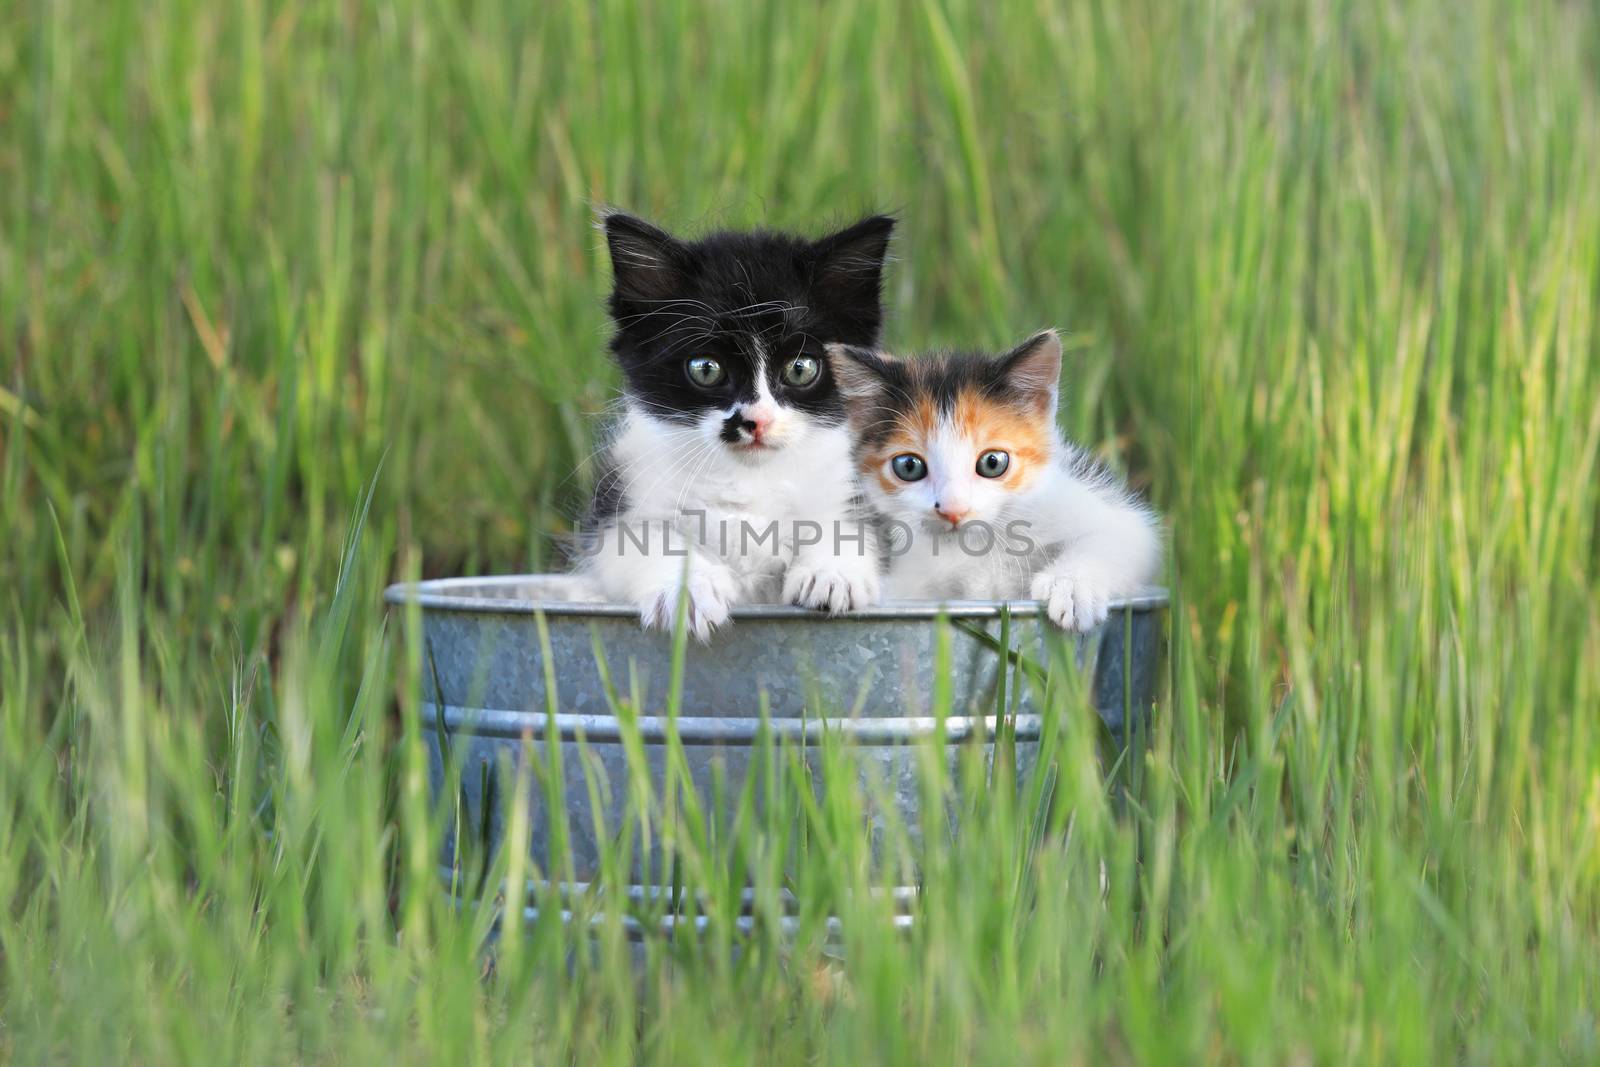 Adorable Kittens Outdoors in Tall Green Grass in a Tin Bin